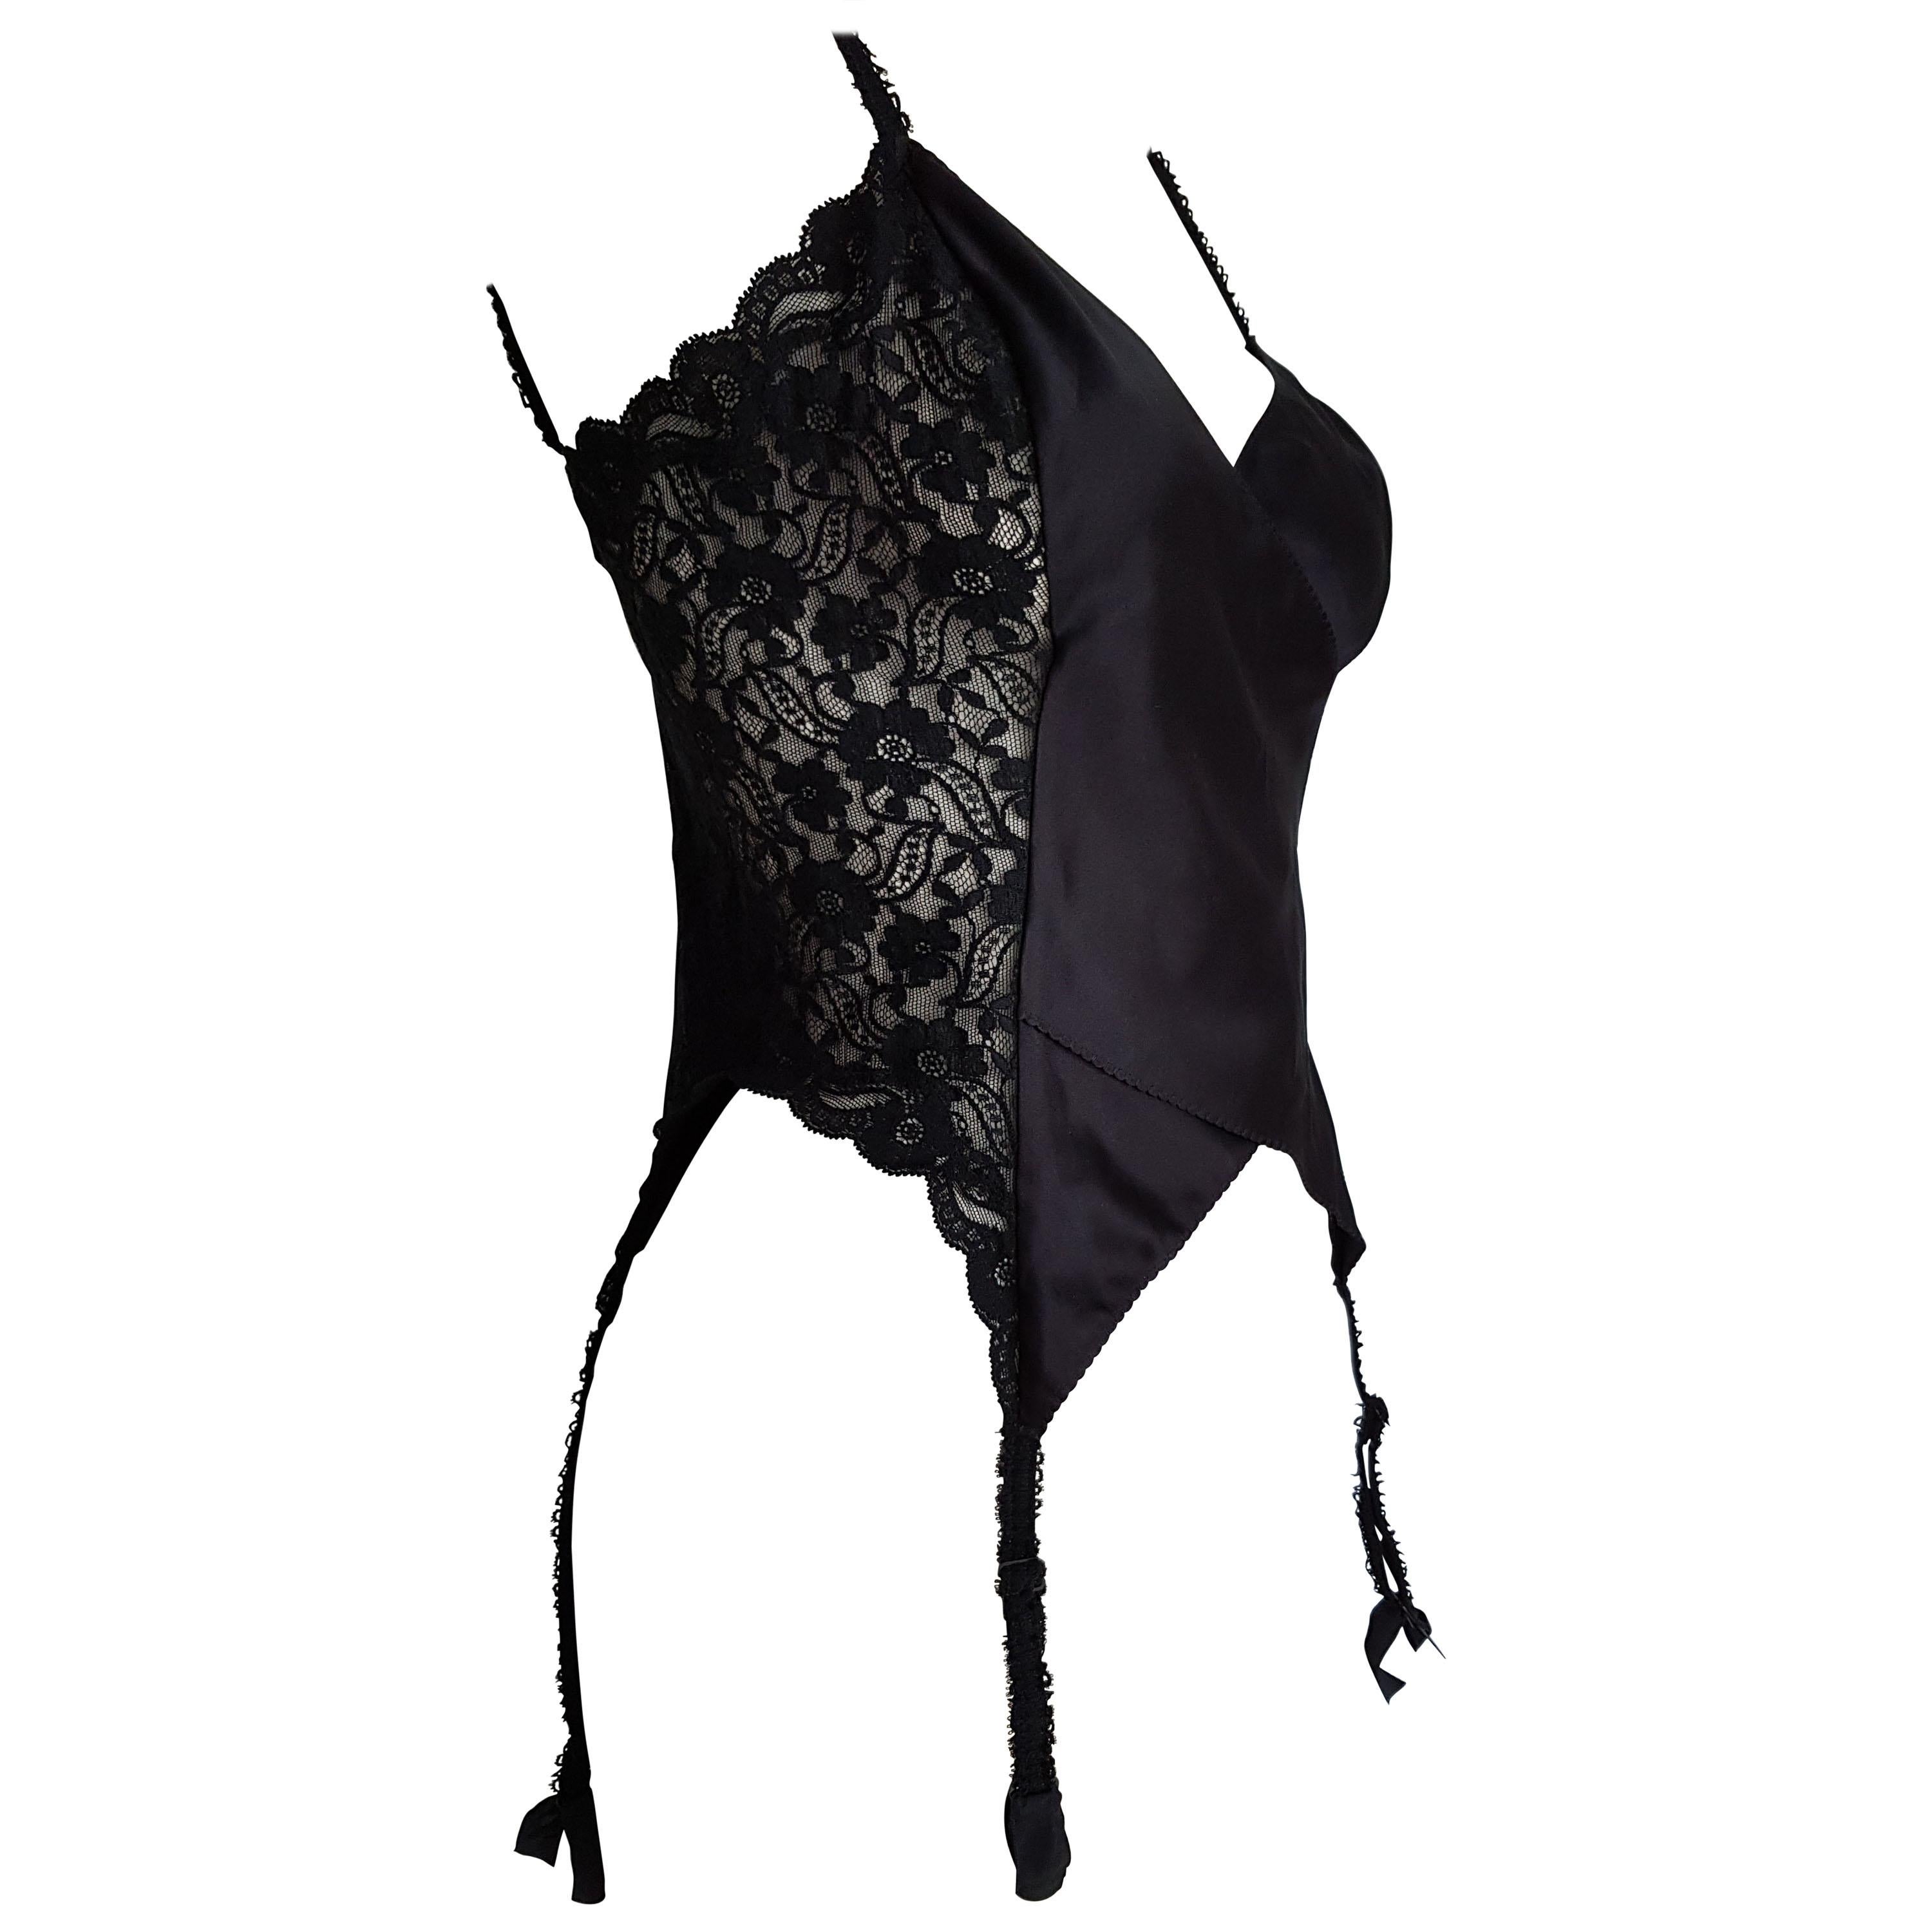 Christian DIOR "New" Haute Couture Lace Silk Black Top Corset - Unworn